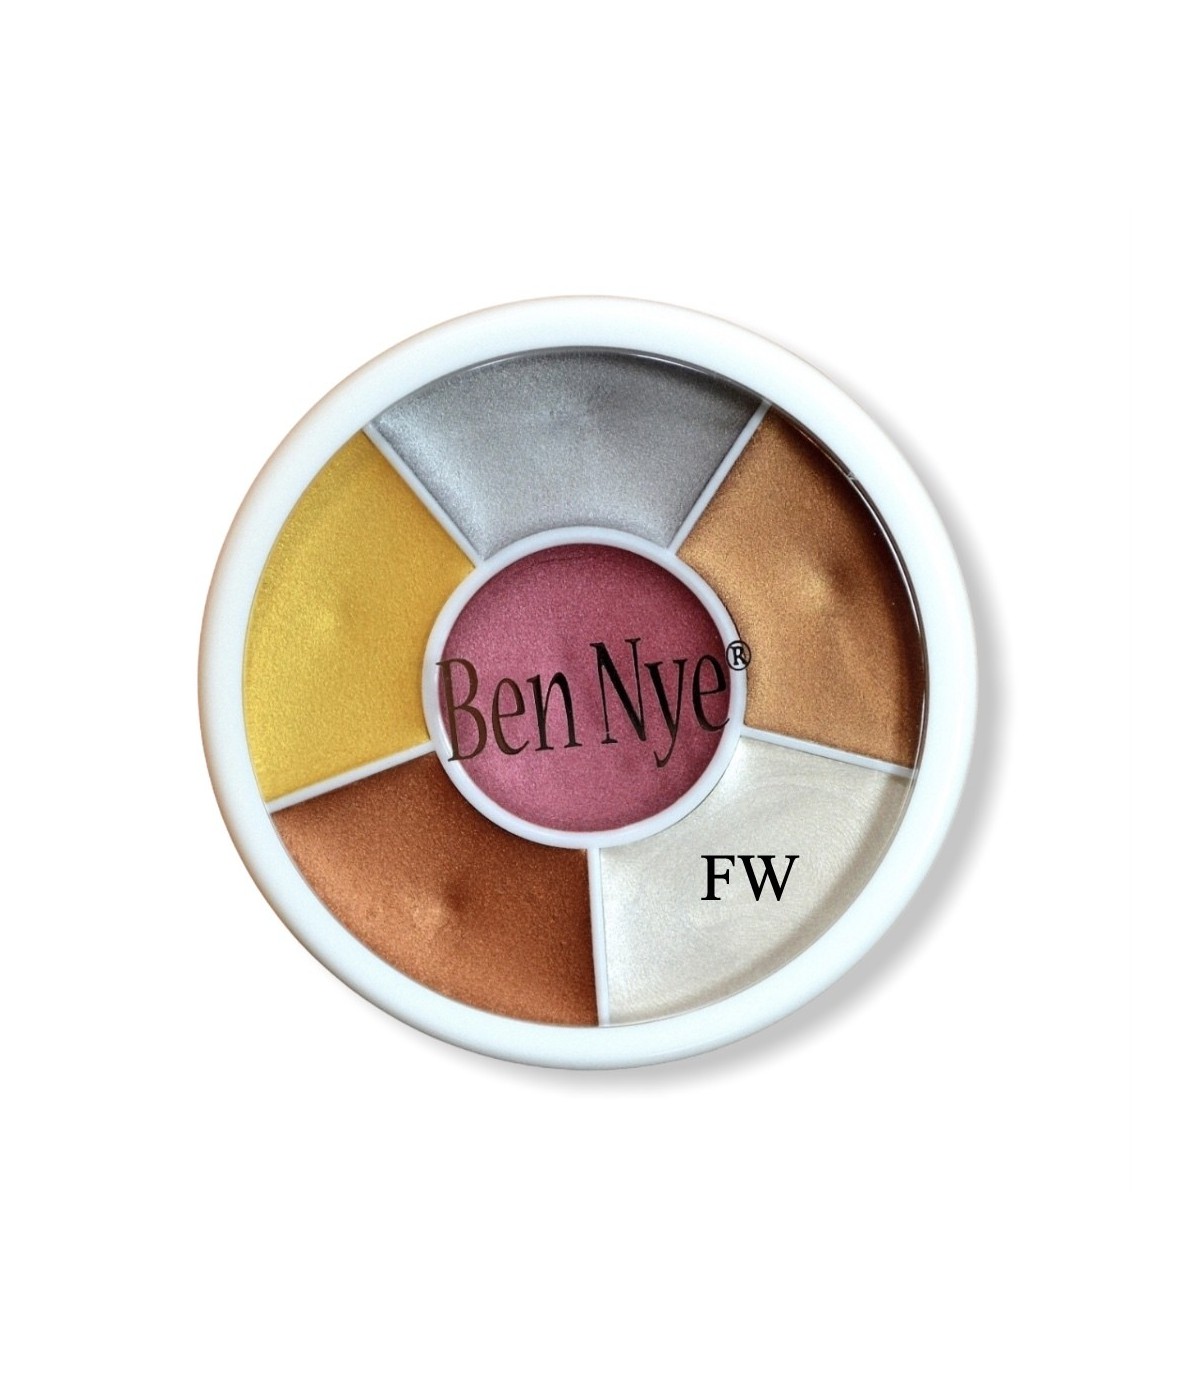 Ben Nye Fireworks Wheel, 6 Farben  28g